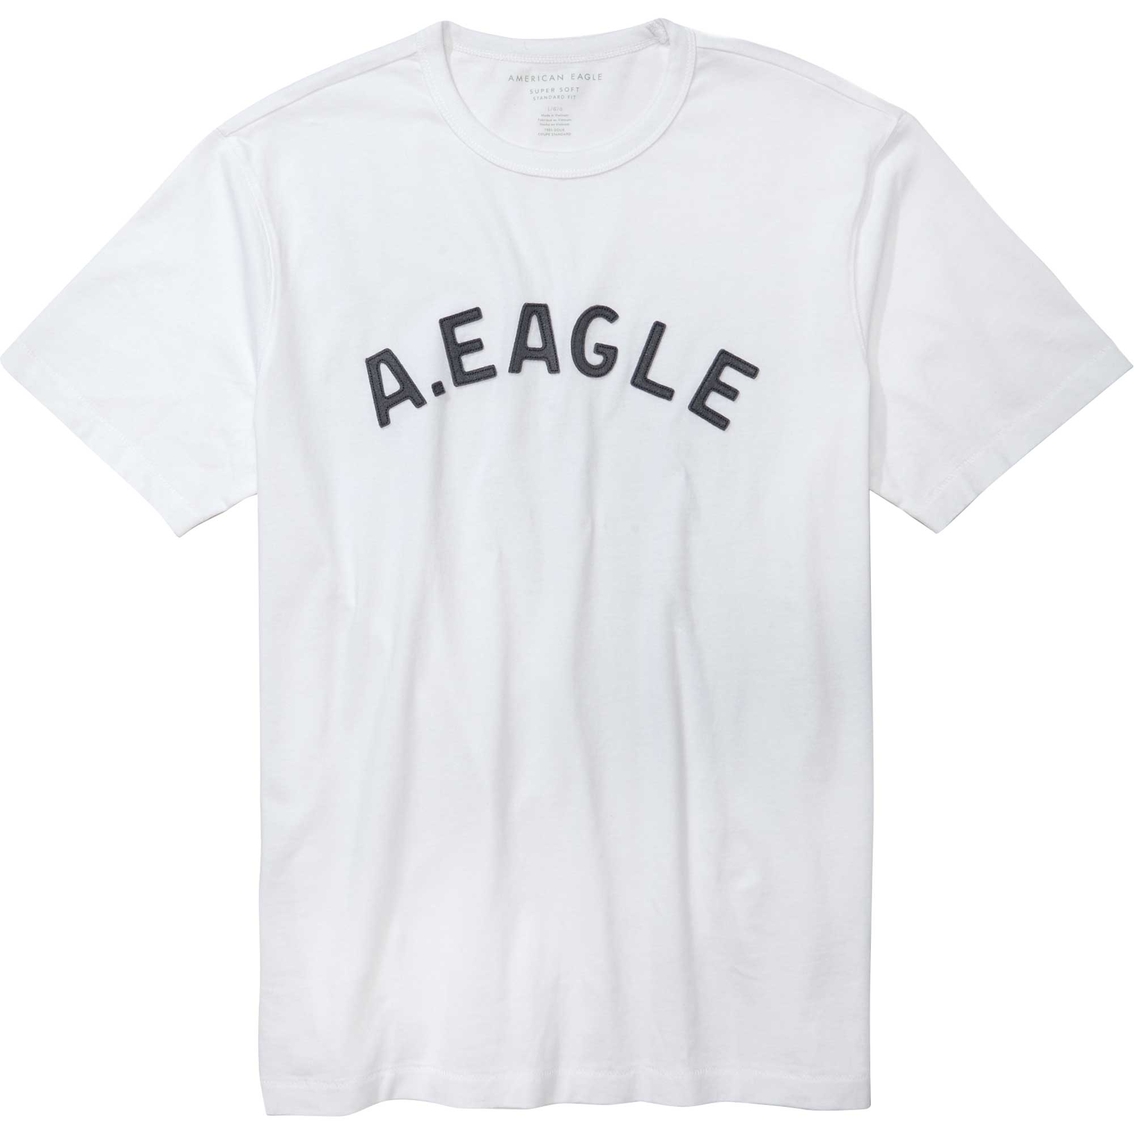 American Eagle Super Soft A. Eagle Graphic Tee | Shirts | Clothing ...